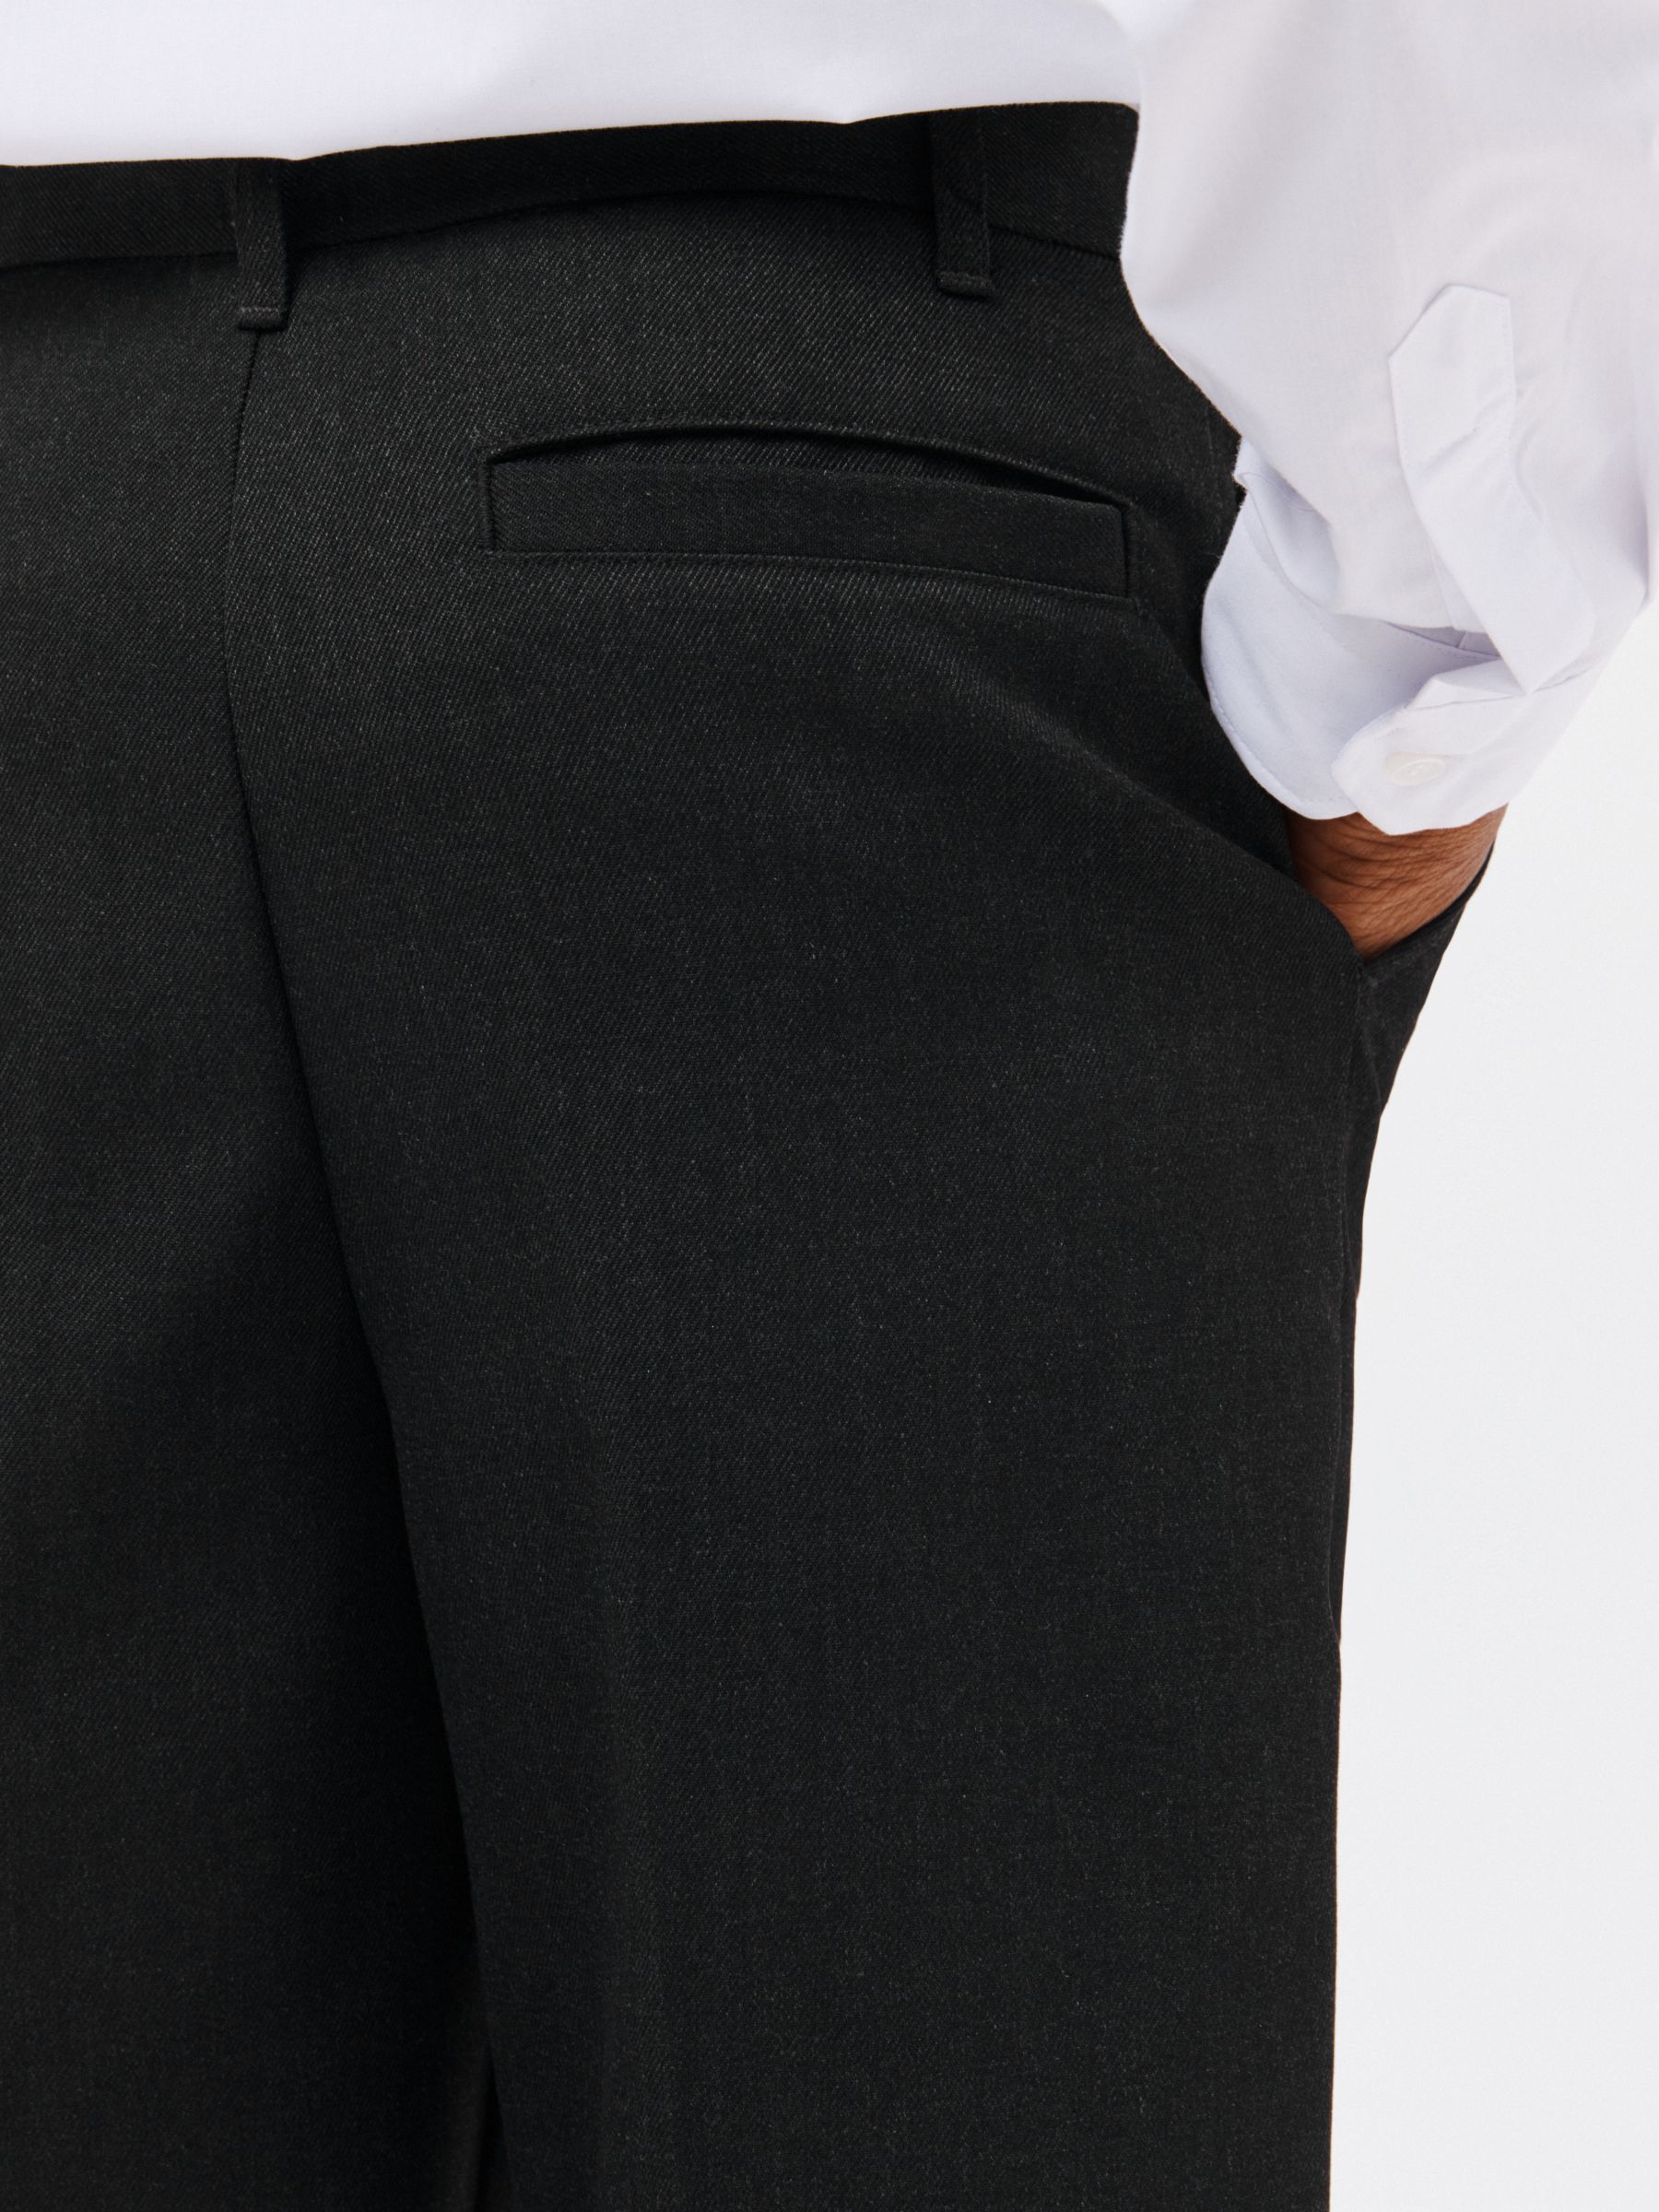 John Lewis Boys' Long Length Skinny School Trousers, Charcoal at